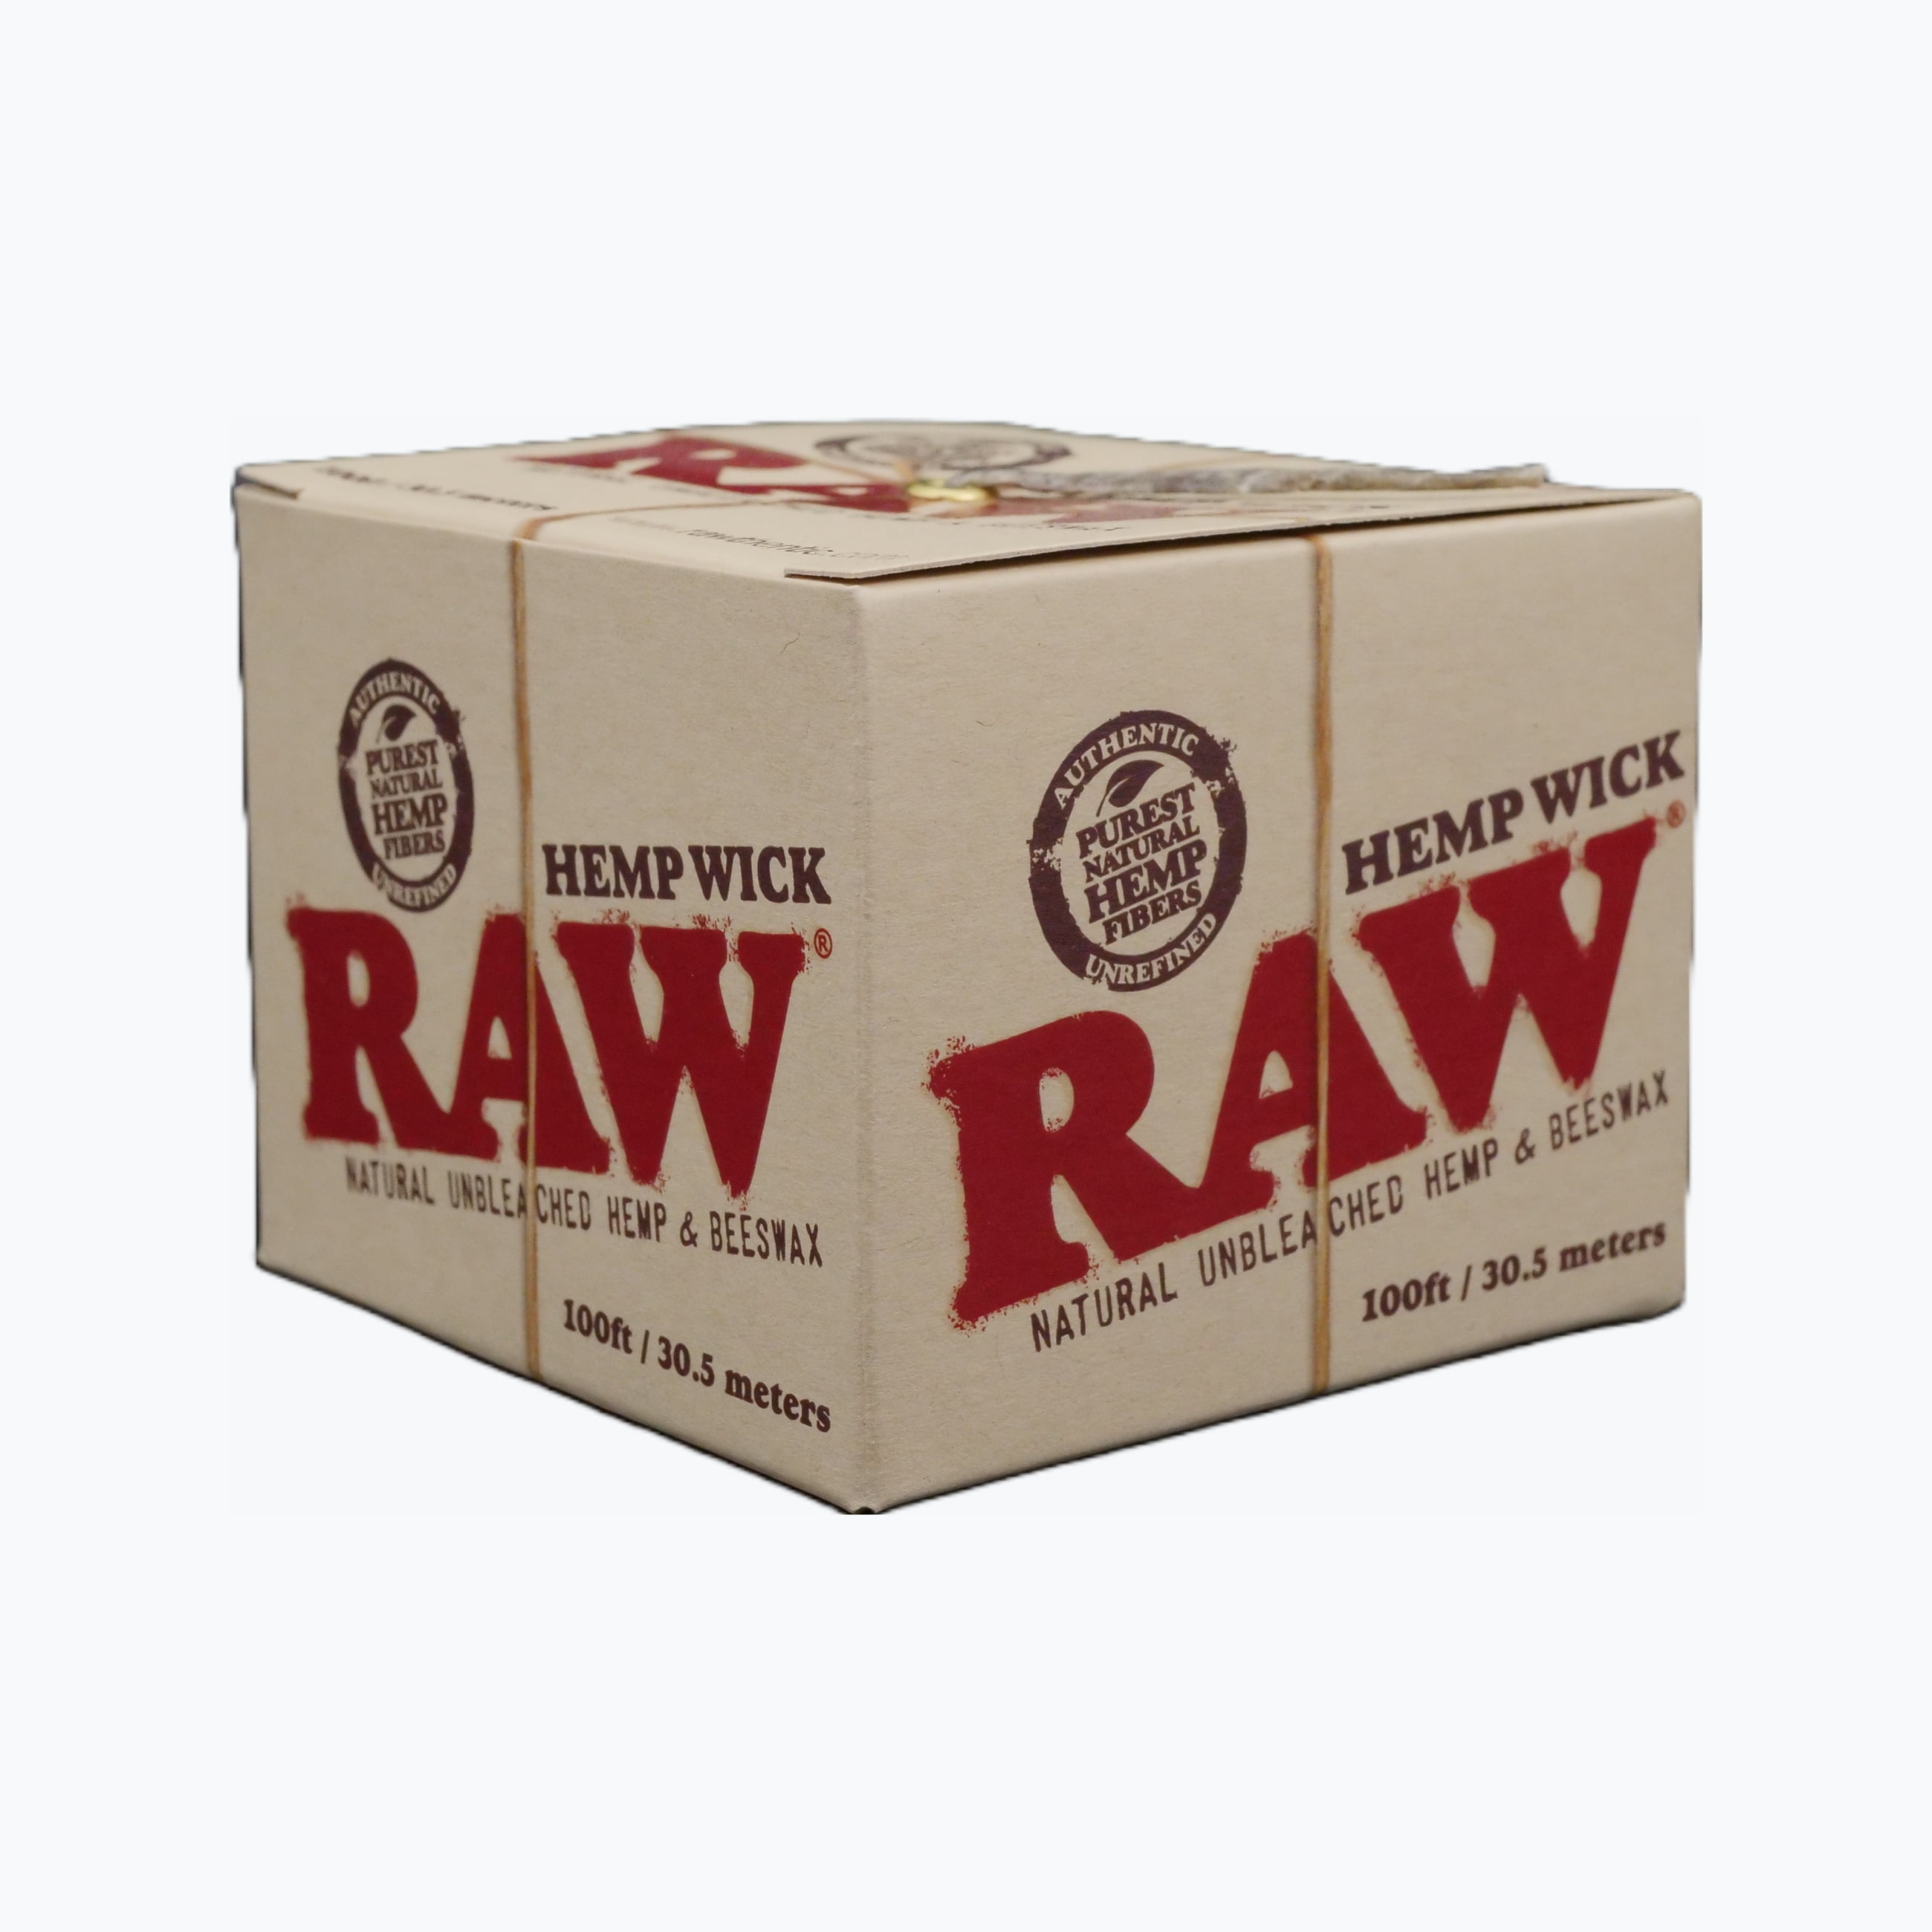 RAW Hemp Wick- Natural Unbleached Hemp & Beeswax Hempwick Roll 10ft / 3  Meters (Pack of 3 Premium 10 Foot Wicks) : Health & Household 